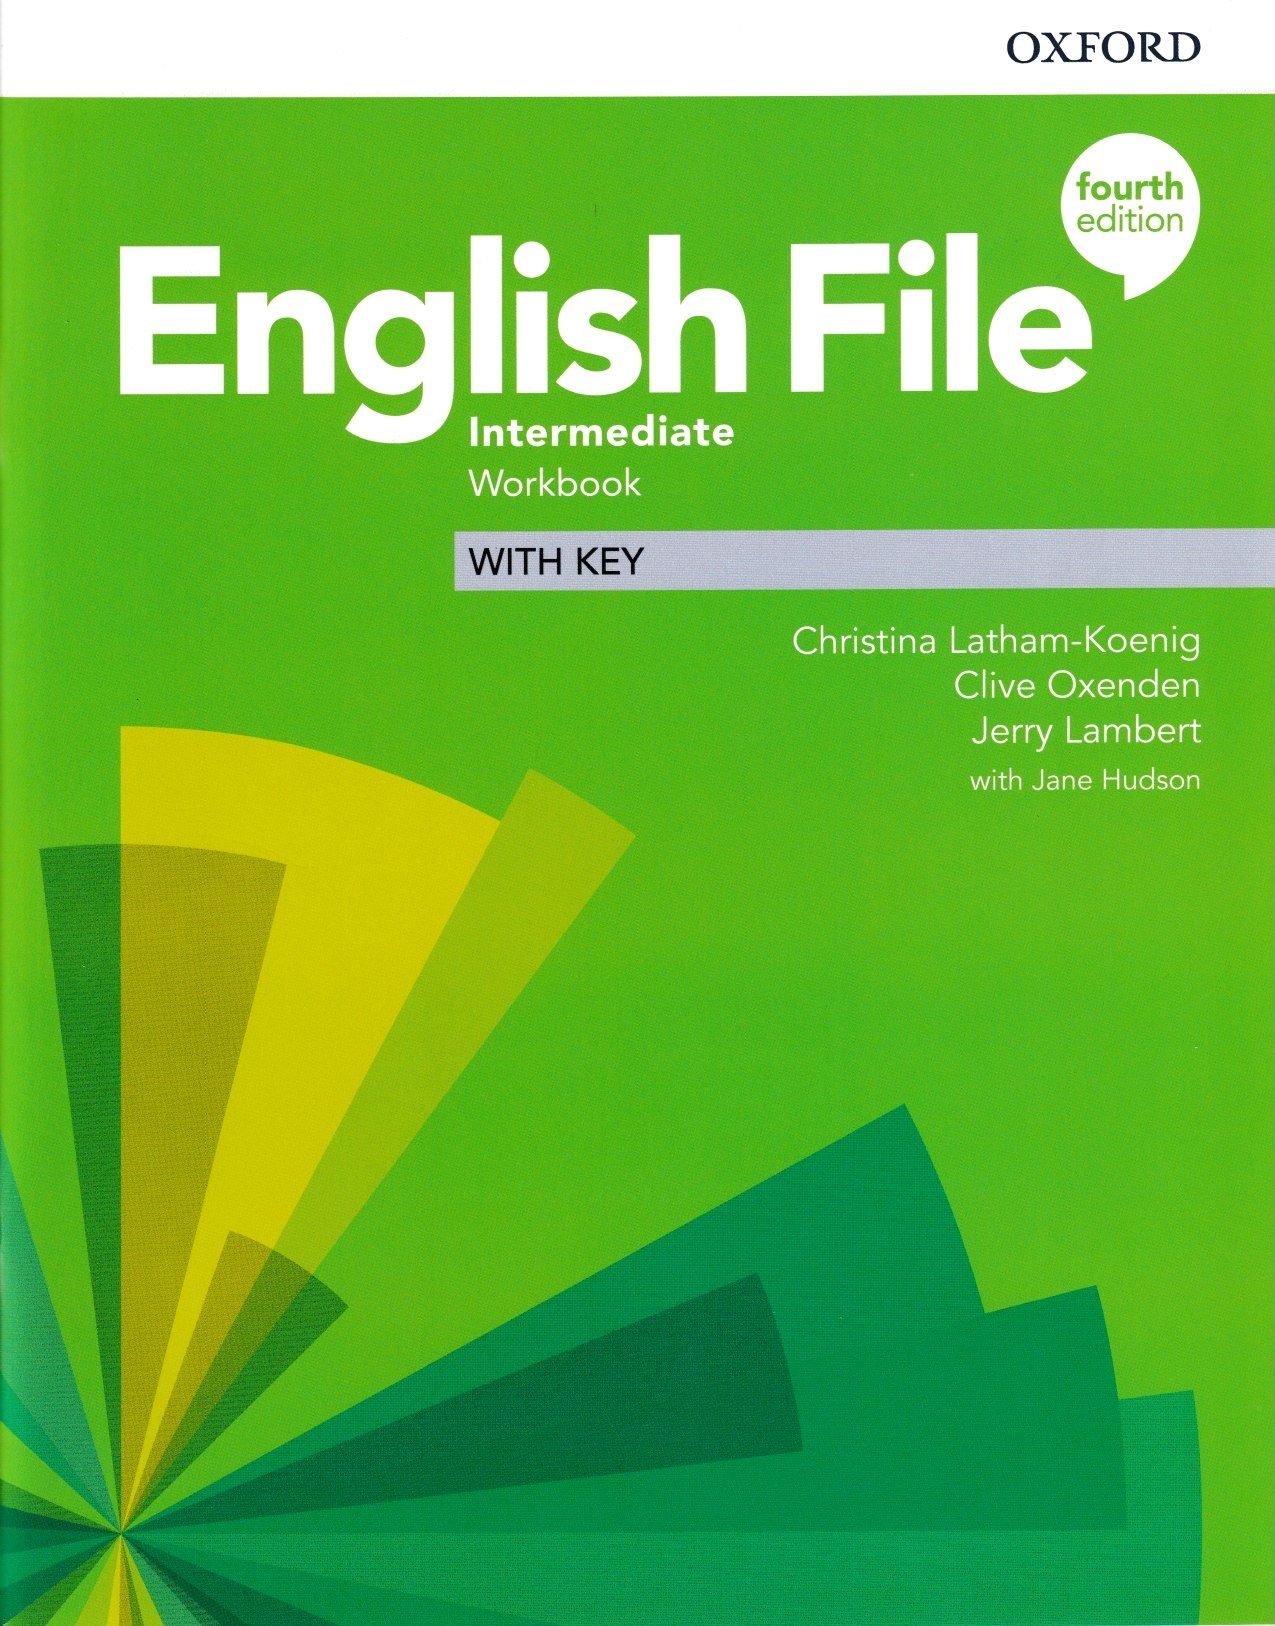 Intermediate english practice. New English file Upper Intermediate fourth Edition. New English file Intermediate 4th Edition. Инглиш файл Аппер интермедит ворк бук. Воркбук интермедиат английский.